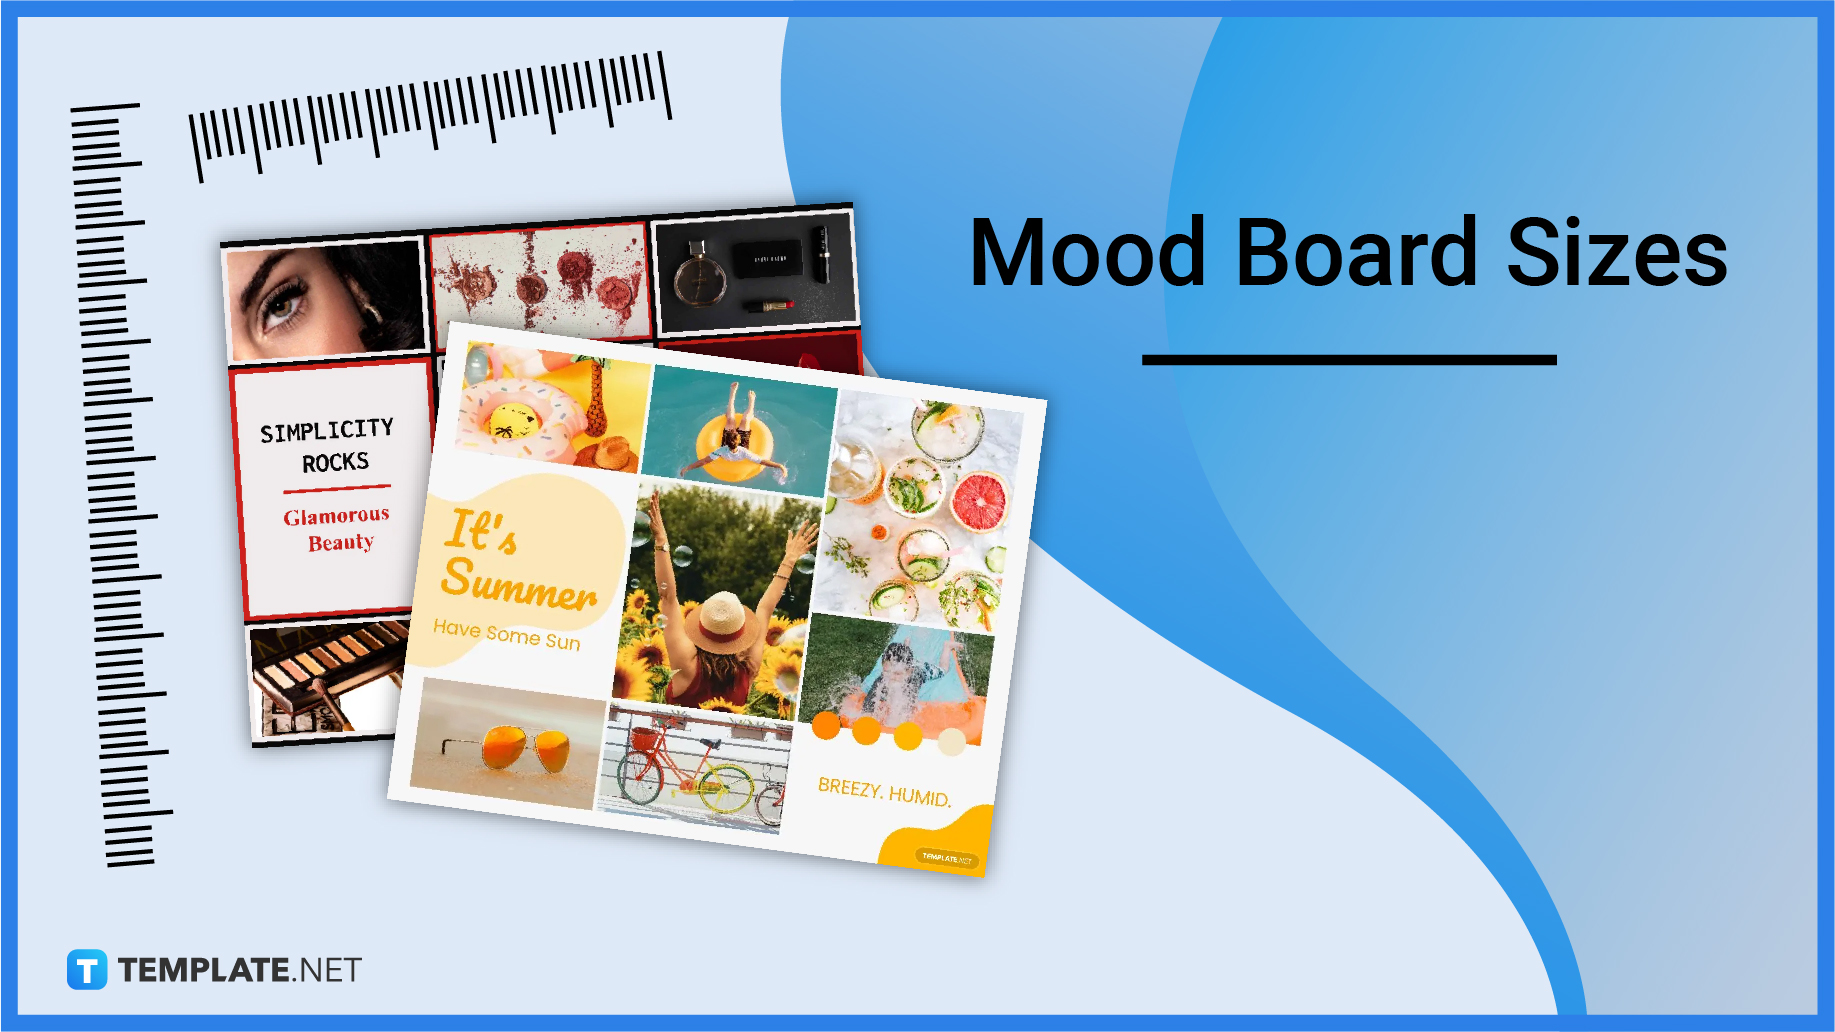 Mood board analysed